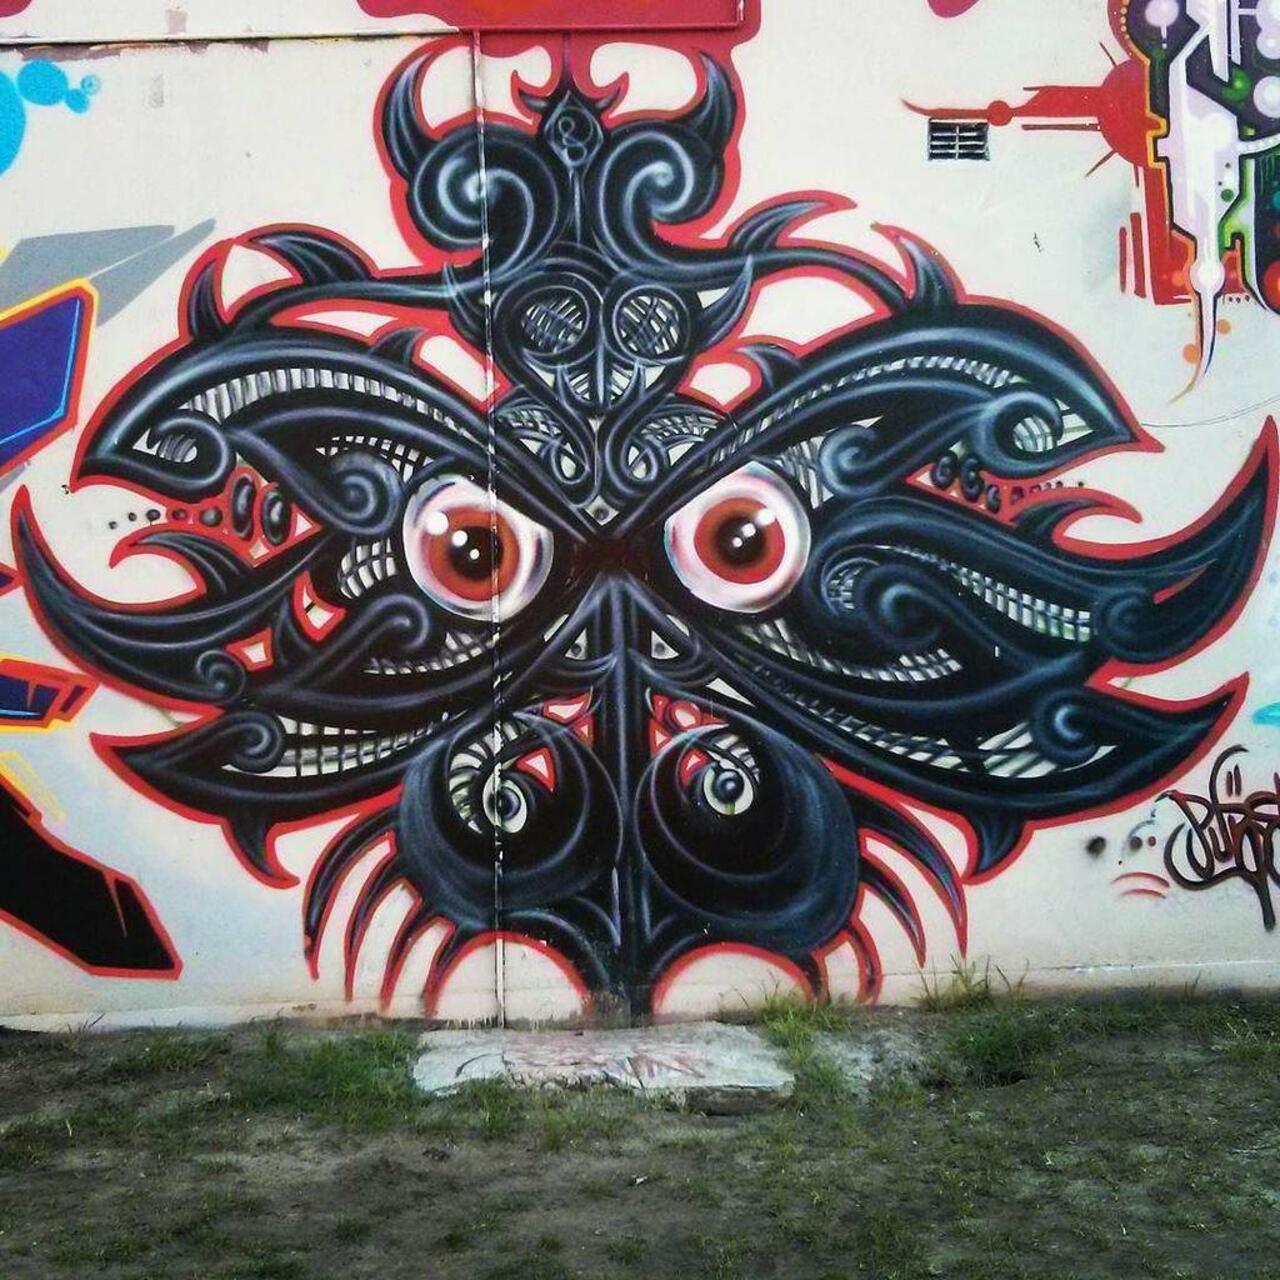 #ifttt #sydney #sydneygraffiti #newtown #rsa_graffiti #arteurbano #streetart #graffiti #graffiso http://t.co/dmCHW1RRNH